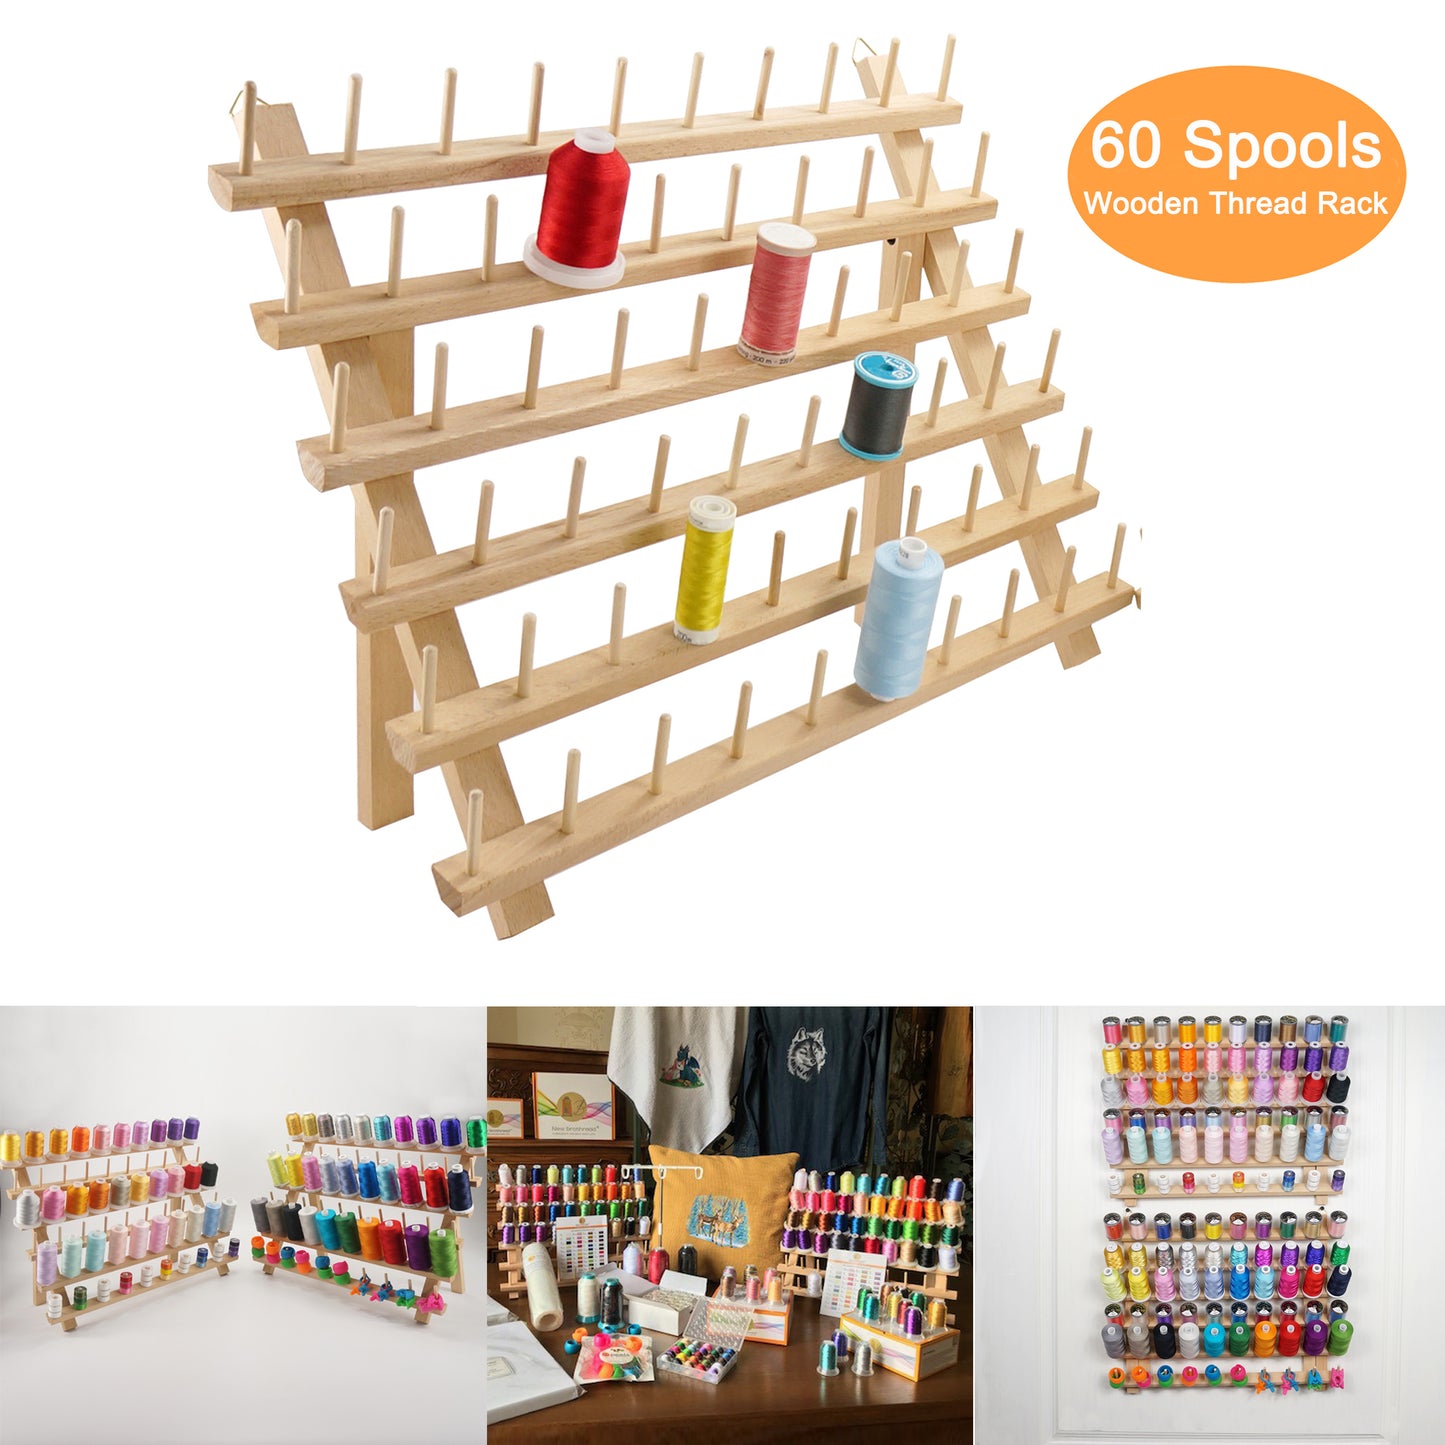 New Brothread 60 Spools Wooden Thread Rack / Thread Holder Organizer with Hanging Hooks